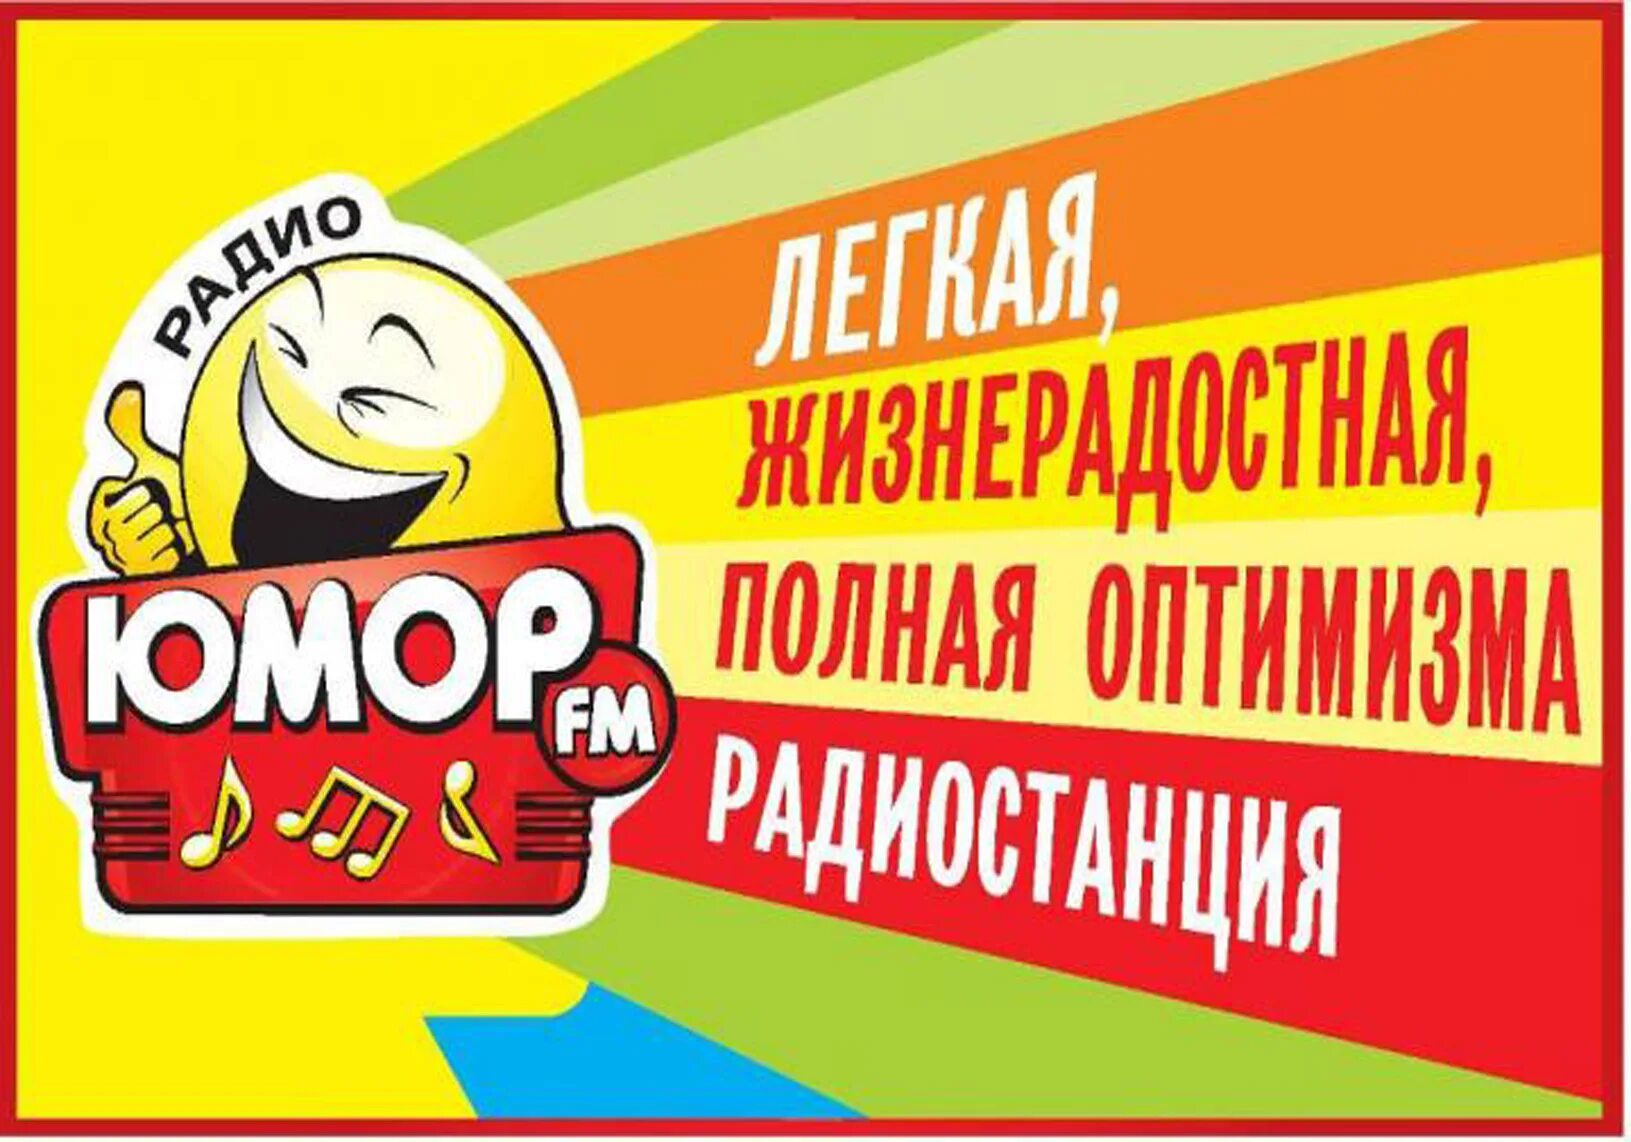 Юмор fm. Радио юмор ФМ. Юмор fm логотип. Юмор МФ. Плейлист радио юмор фм